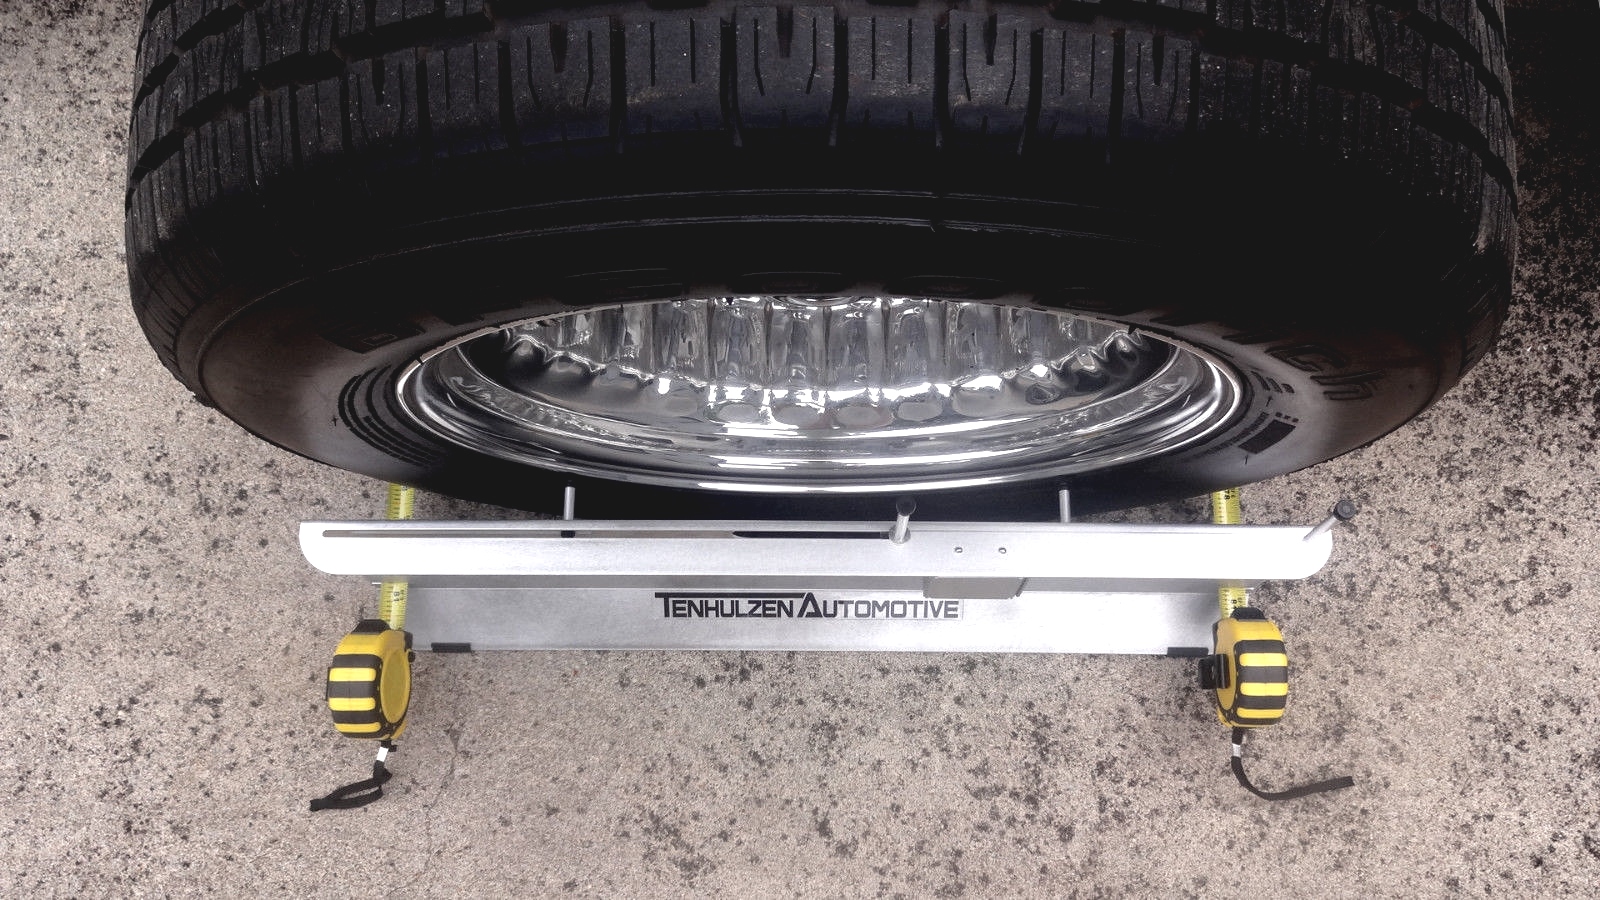 Tenhulzen Automotive 2-Wheel Alignment Tool Measures Camber/Caster/Toe